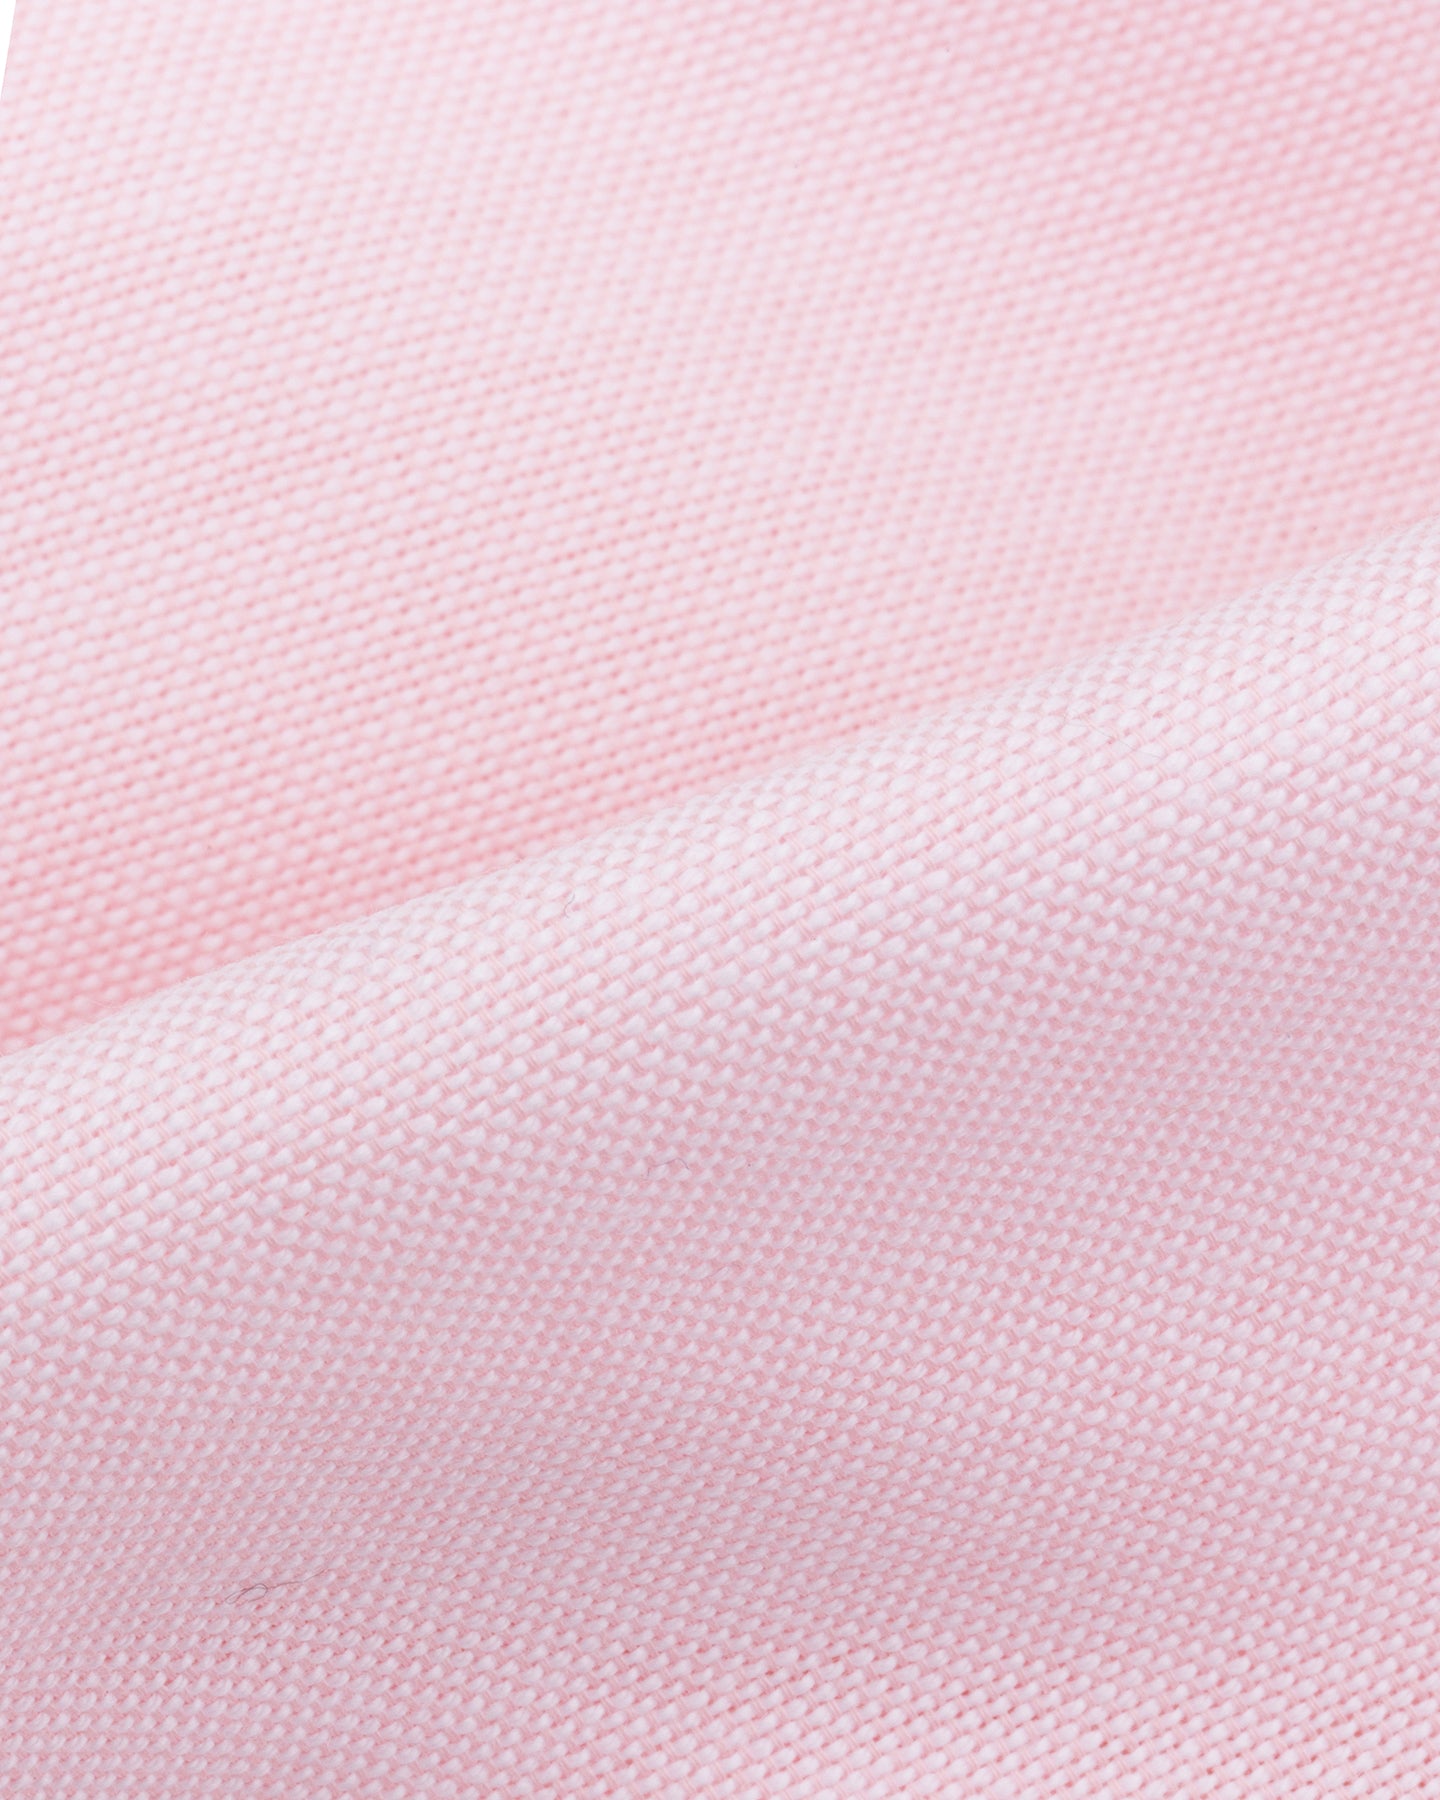 Pink oxford cloth shirt fabric